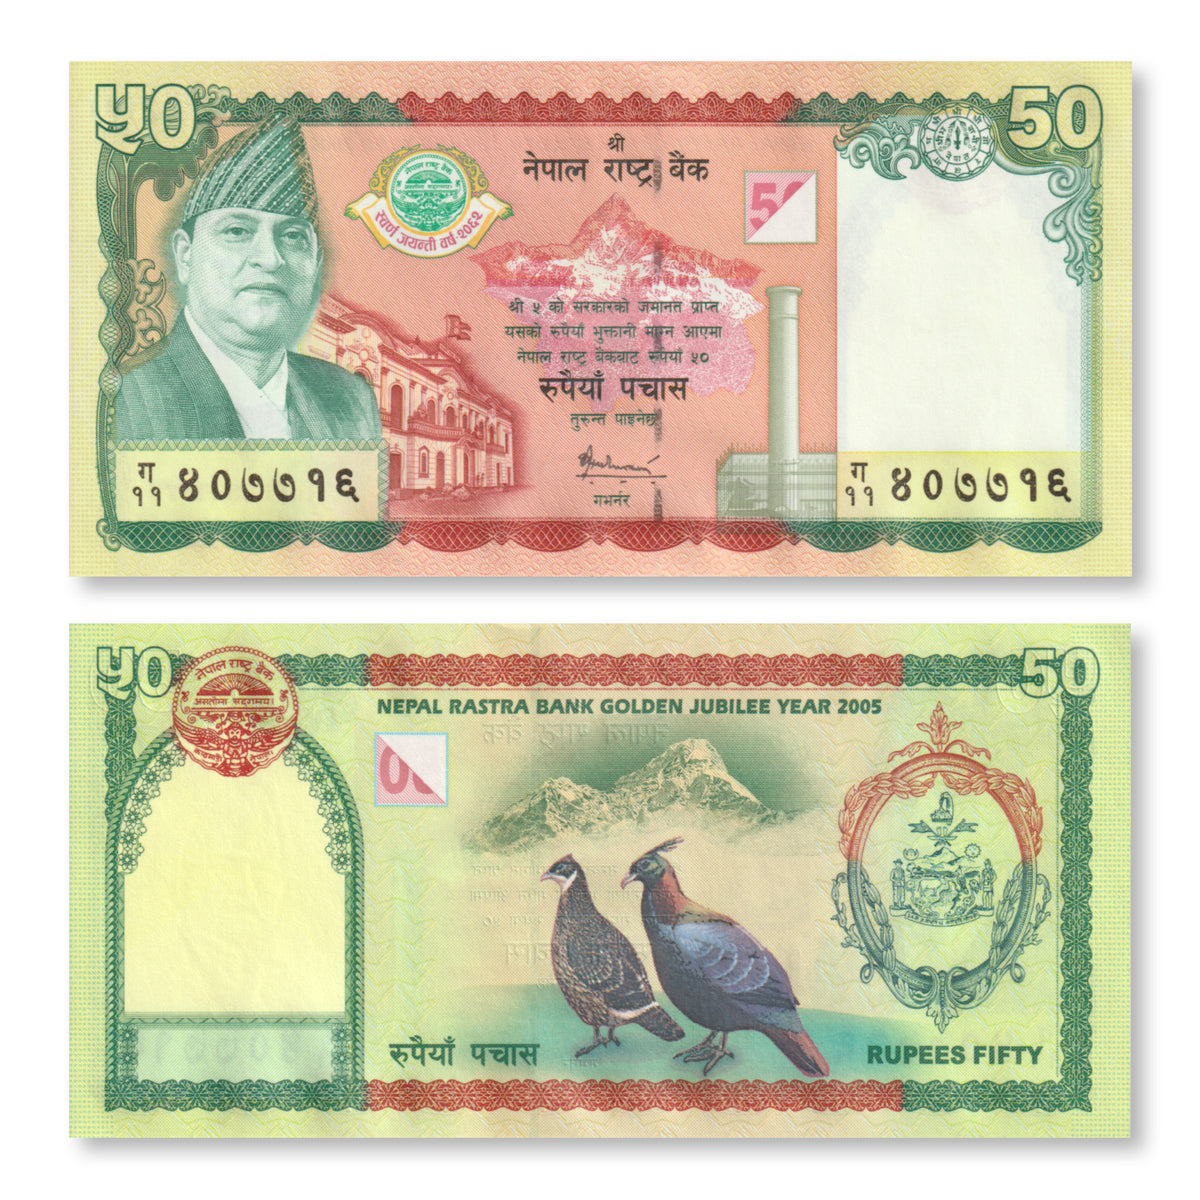 Nepal 50 Rupees, 2005 Commemorative, B267a, P52, UNC - Robert's World Money - World Banknotes